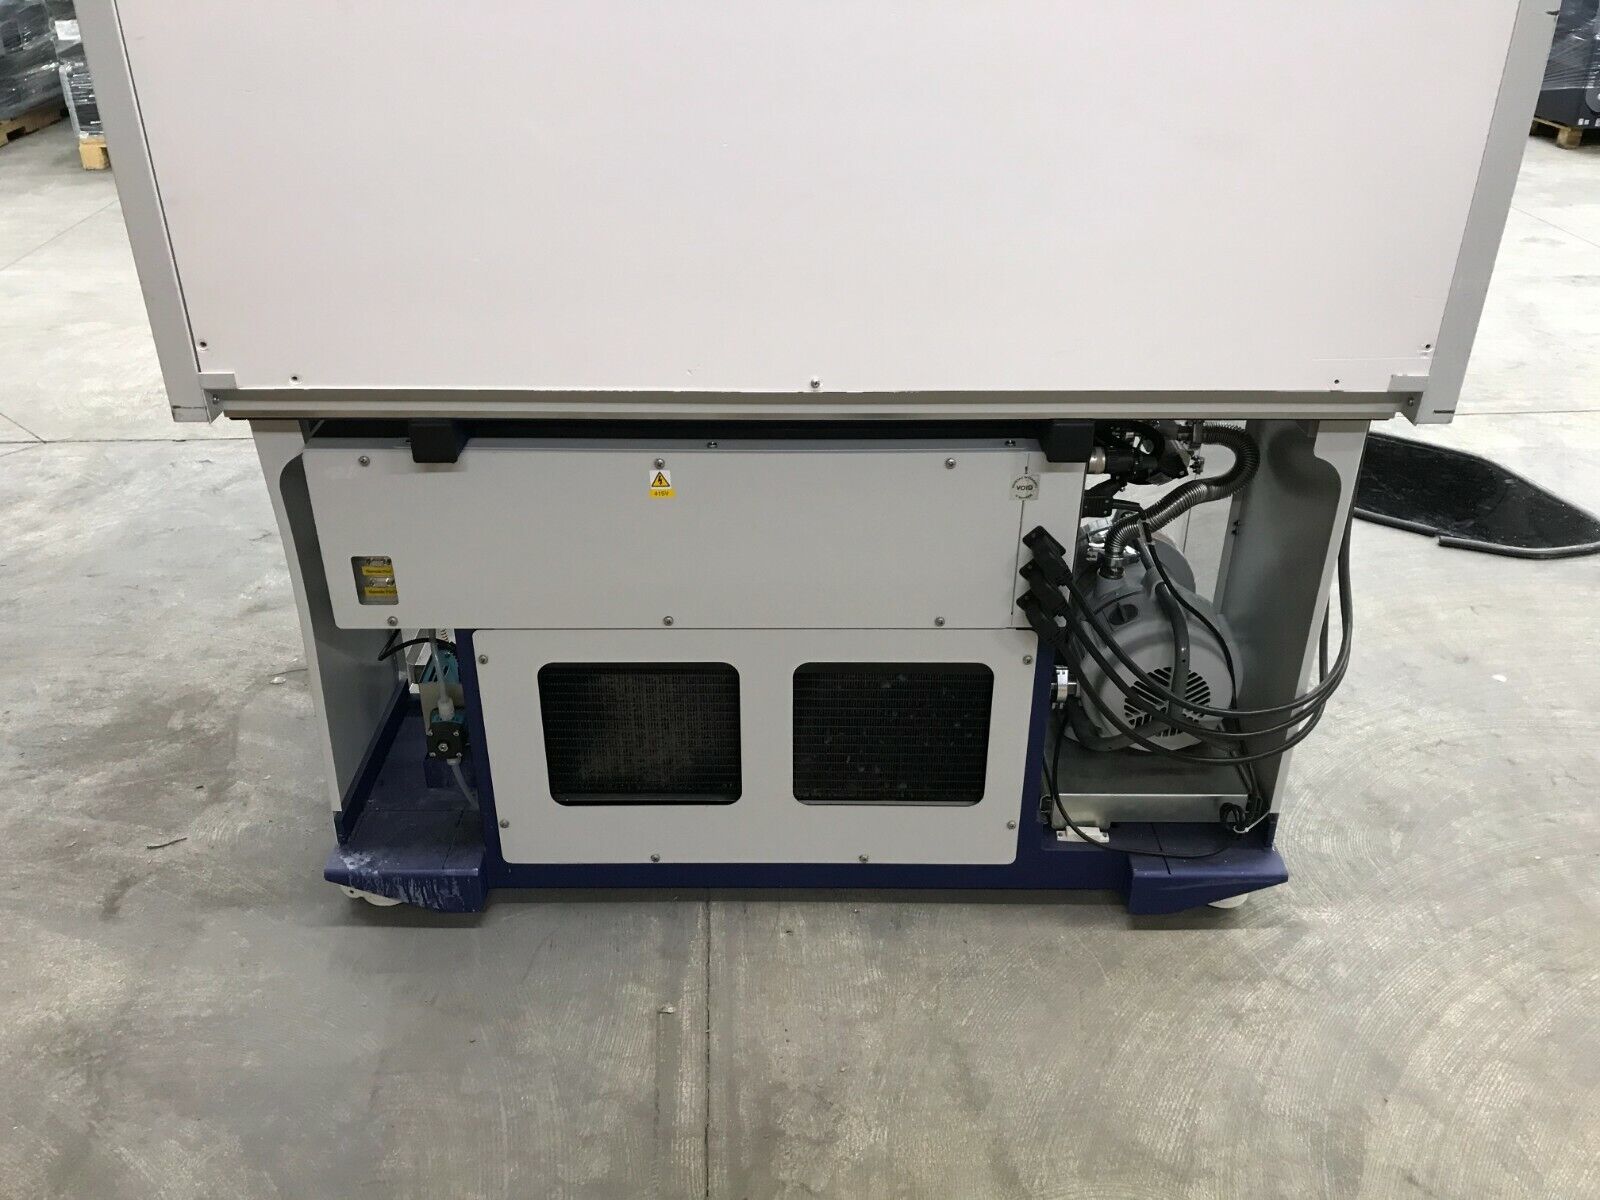 GeneVac HT-24 HT-12 Series II Workstation Evaporators w/ VC4000D & Edwards Pump